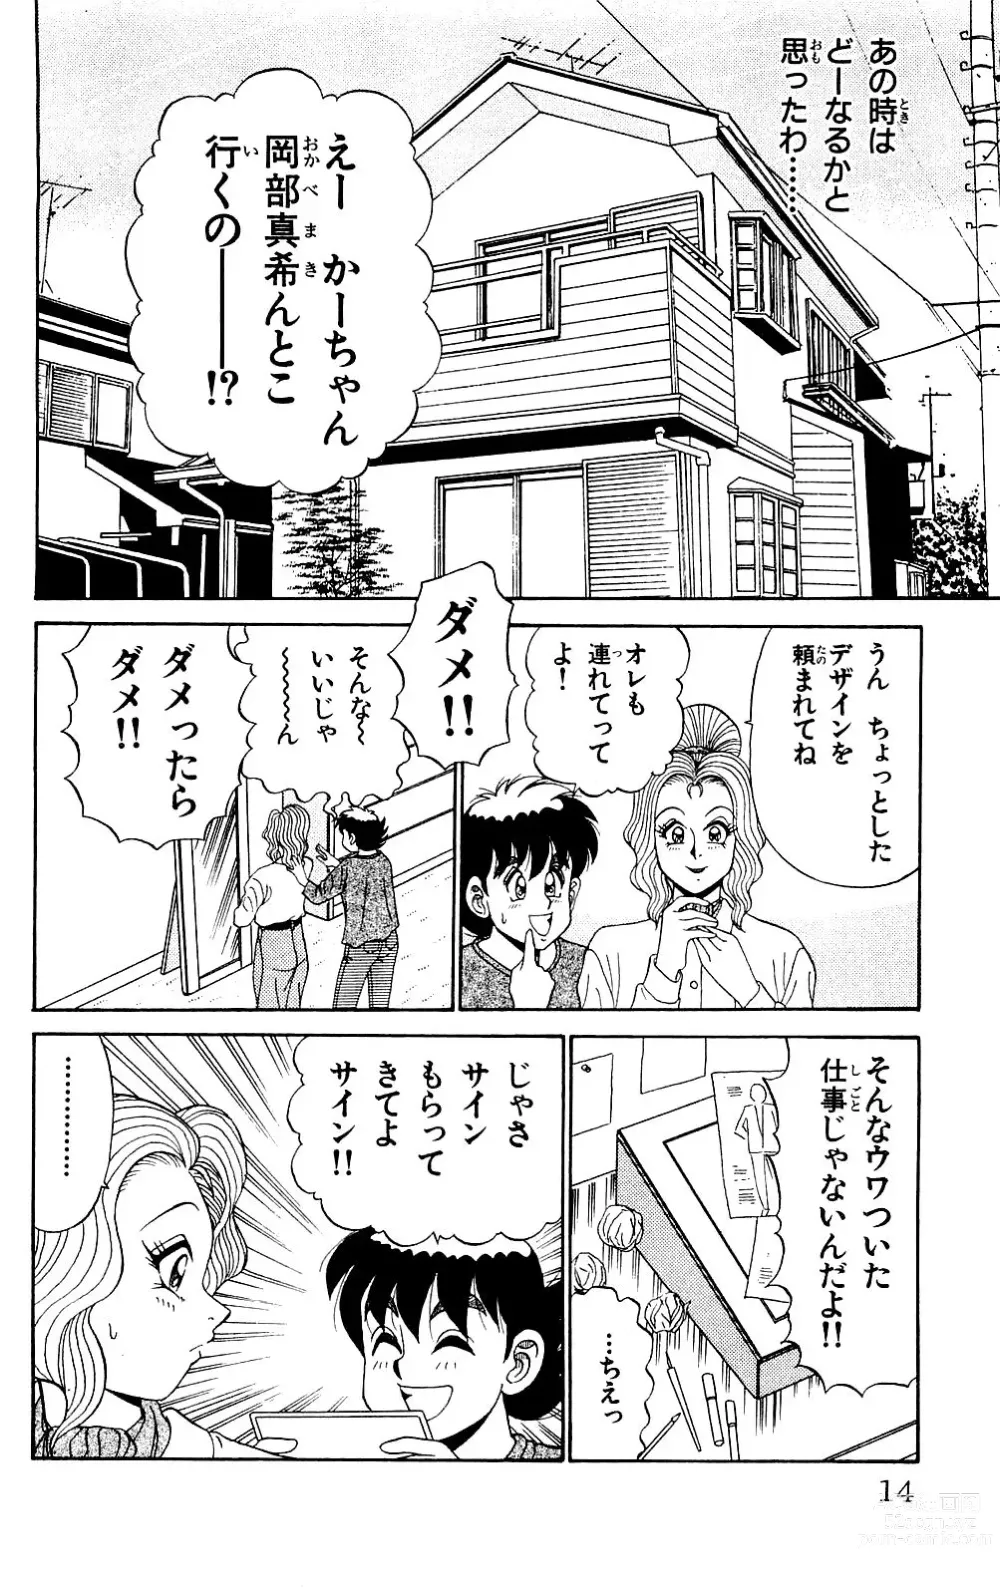 Page 12 of manga Orette Piyoritan 04